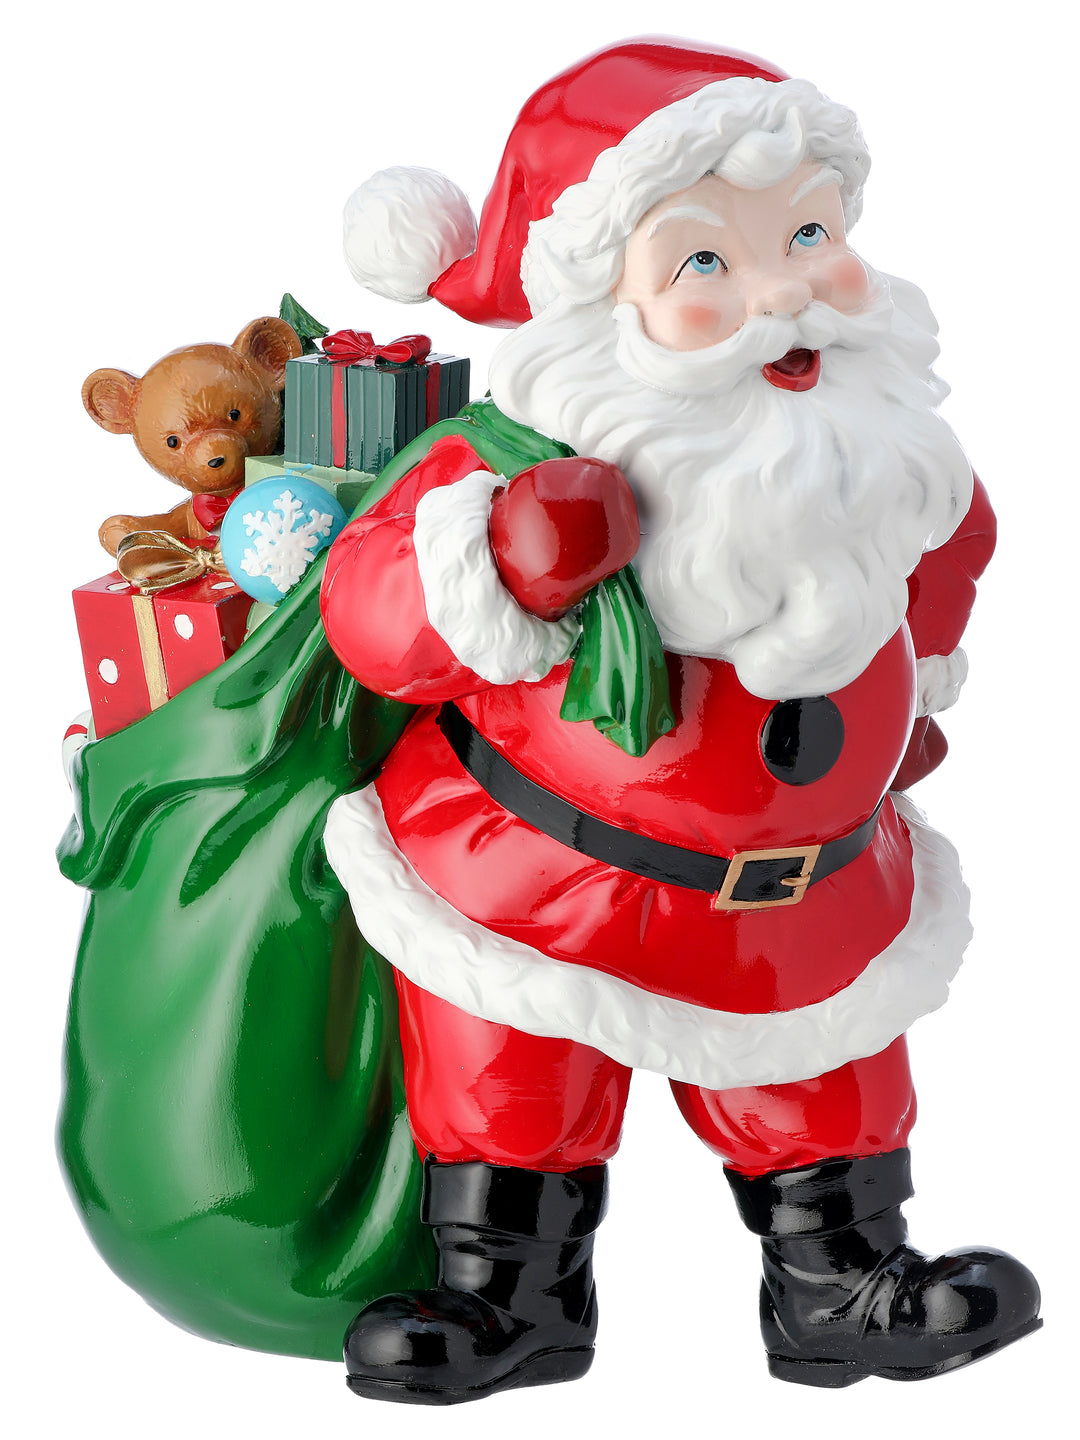 Regency 15.5" Resin Santa with Gift bag